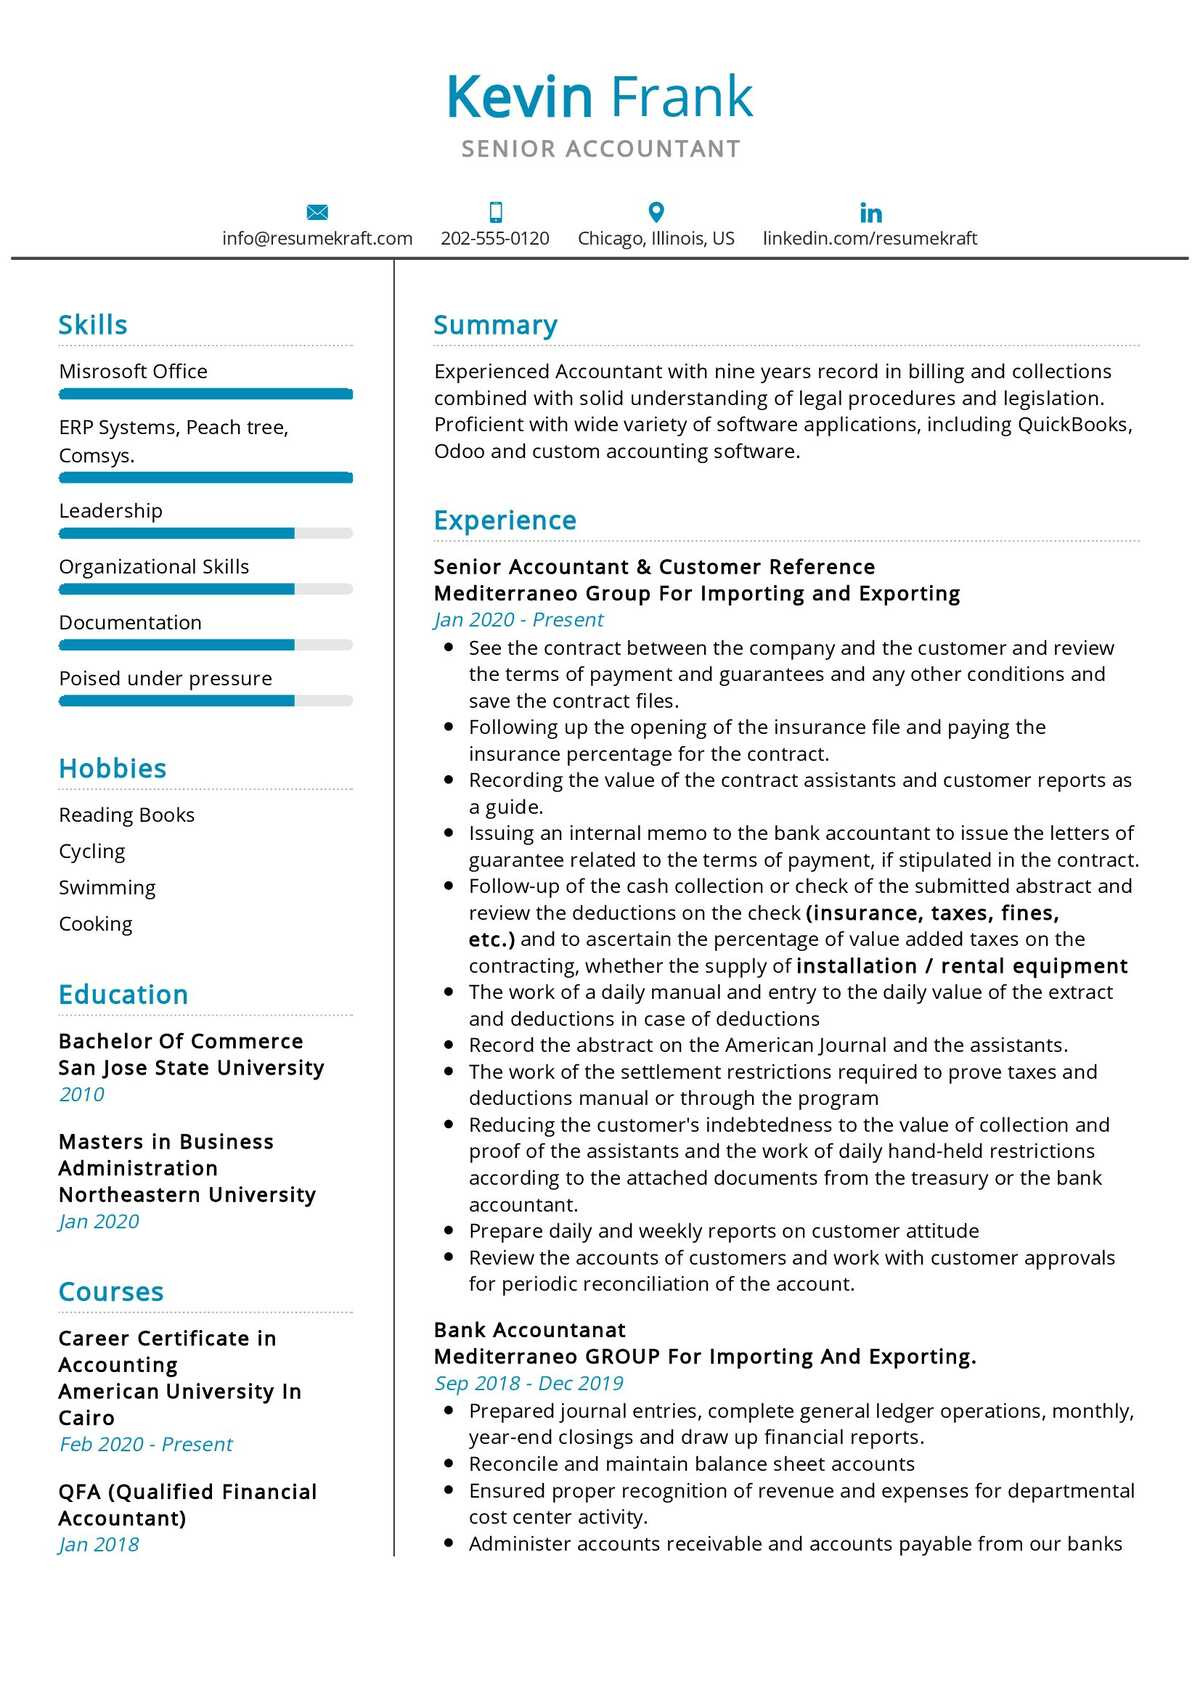 Sample Resume for Experienced Senior Accountant Senior Accountant Resume Example 2021 Writing Guide – Resumekraft